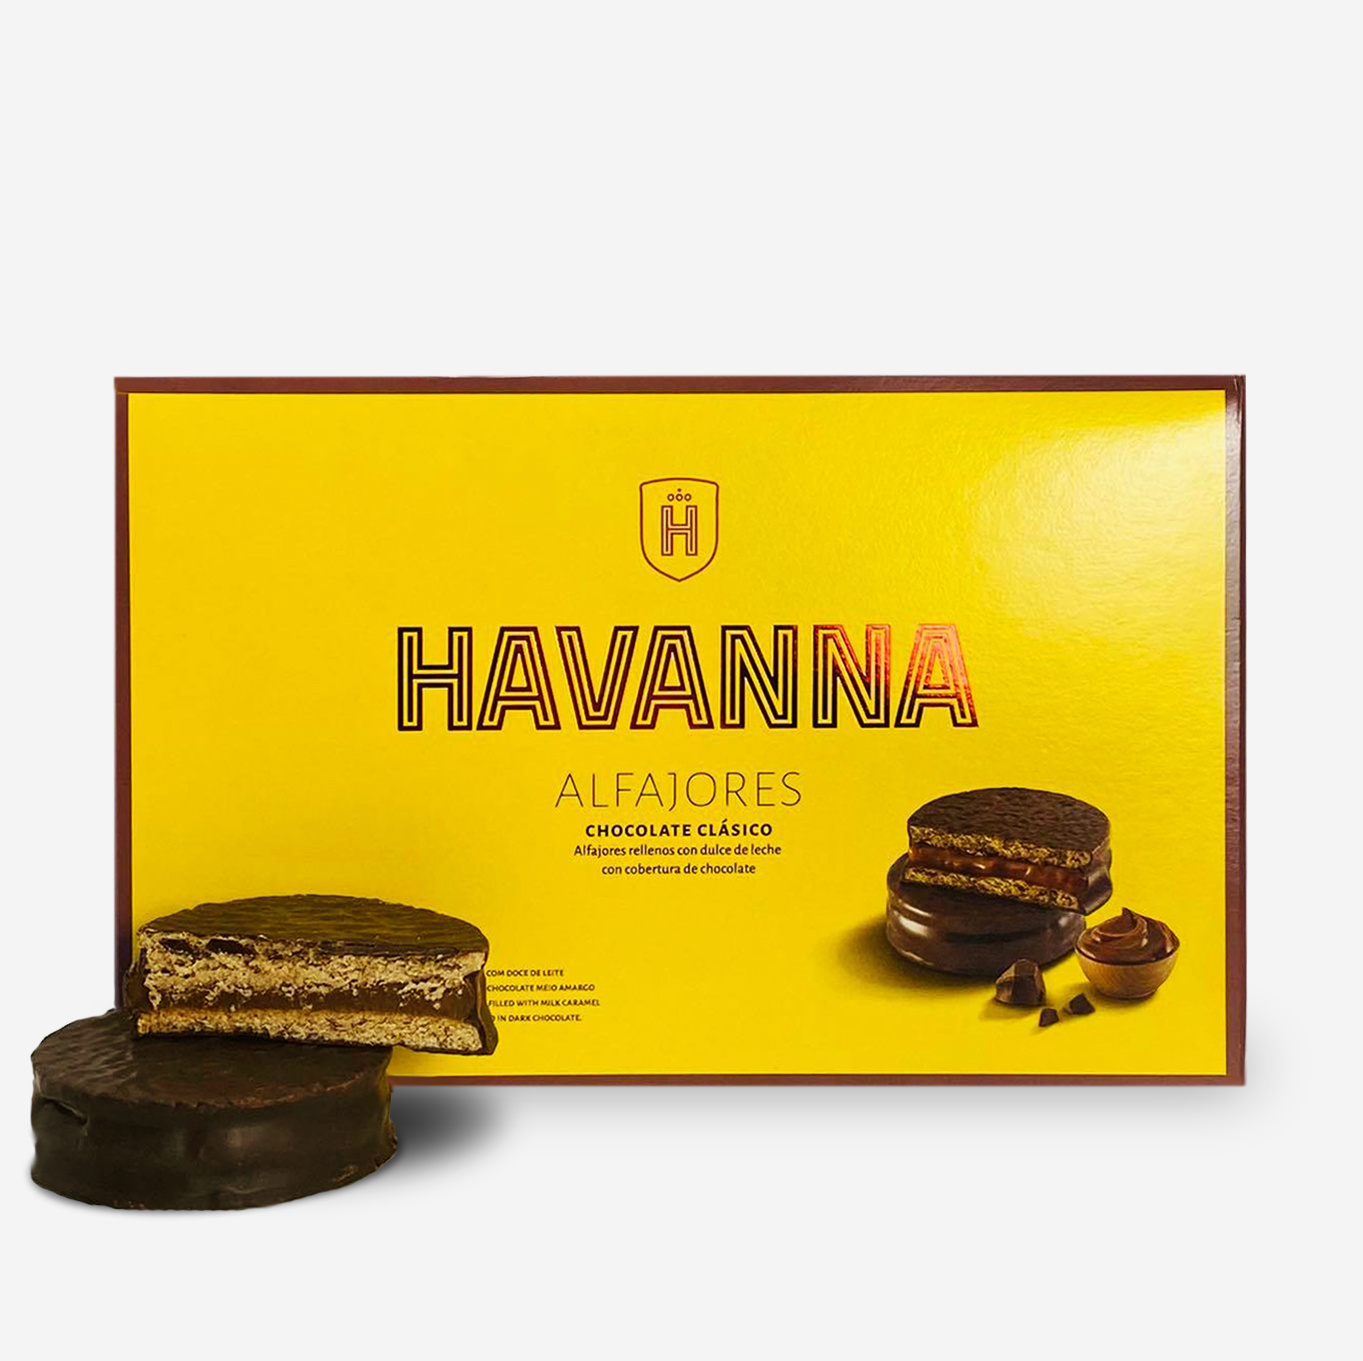 HAVANNA ALFAJORES CHOCOLATE 6 ARGENTINA buy - SOUTH EMBASSY